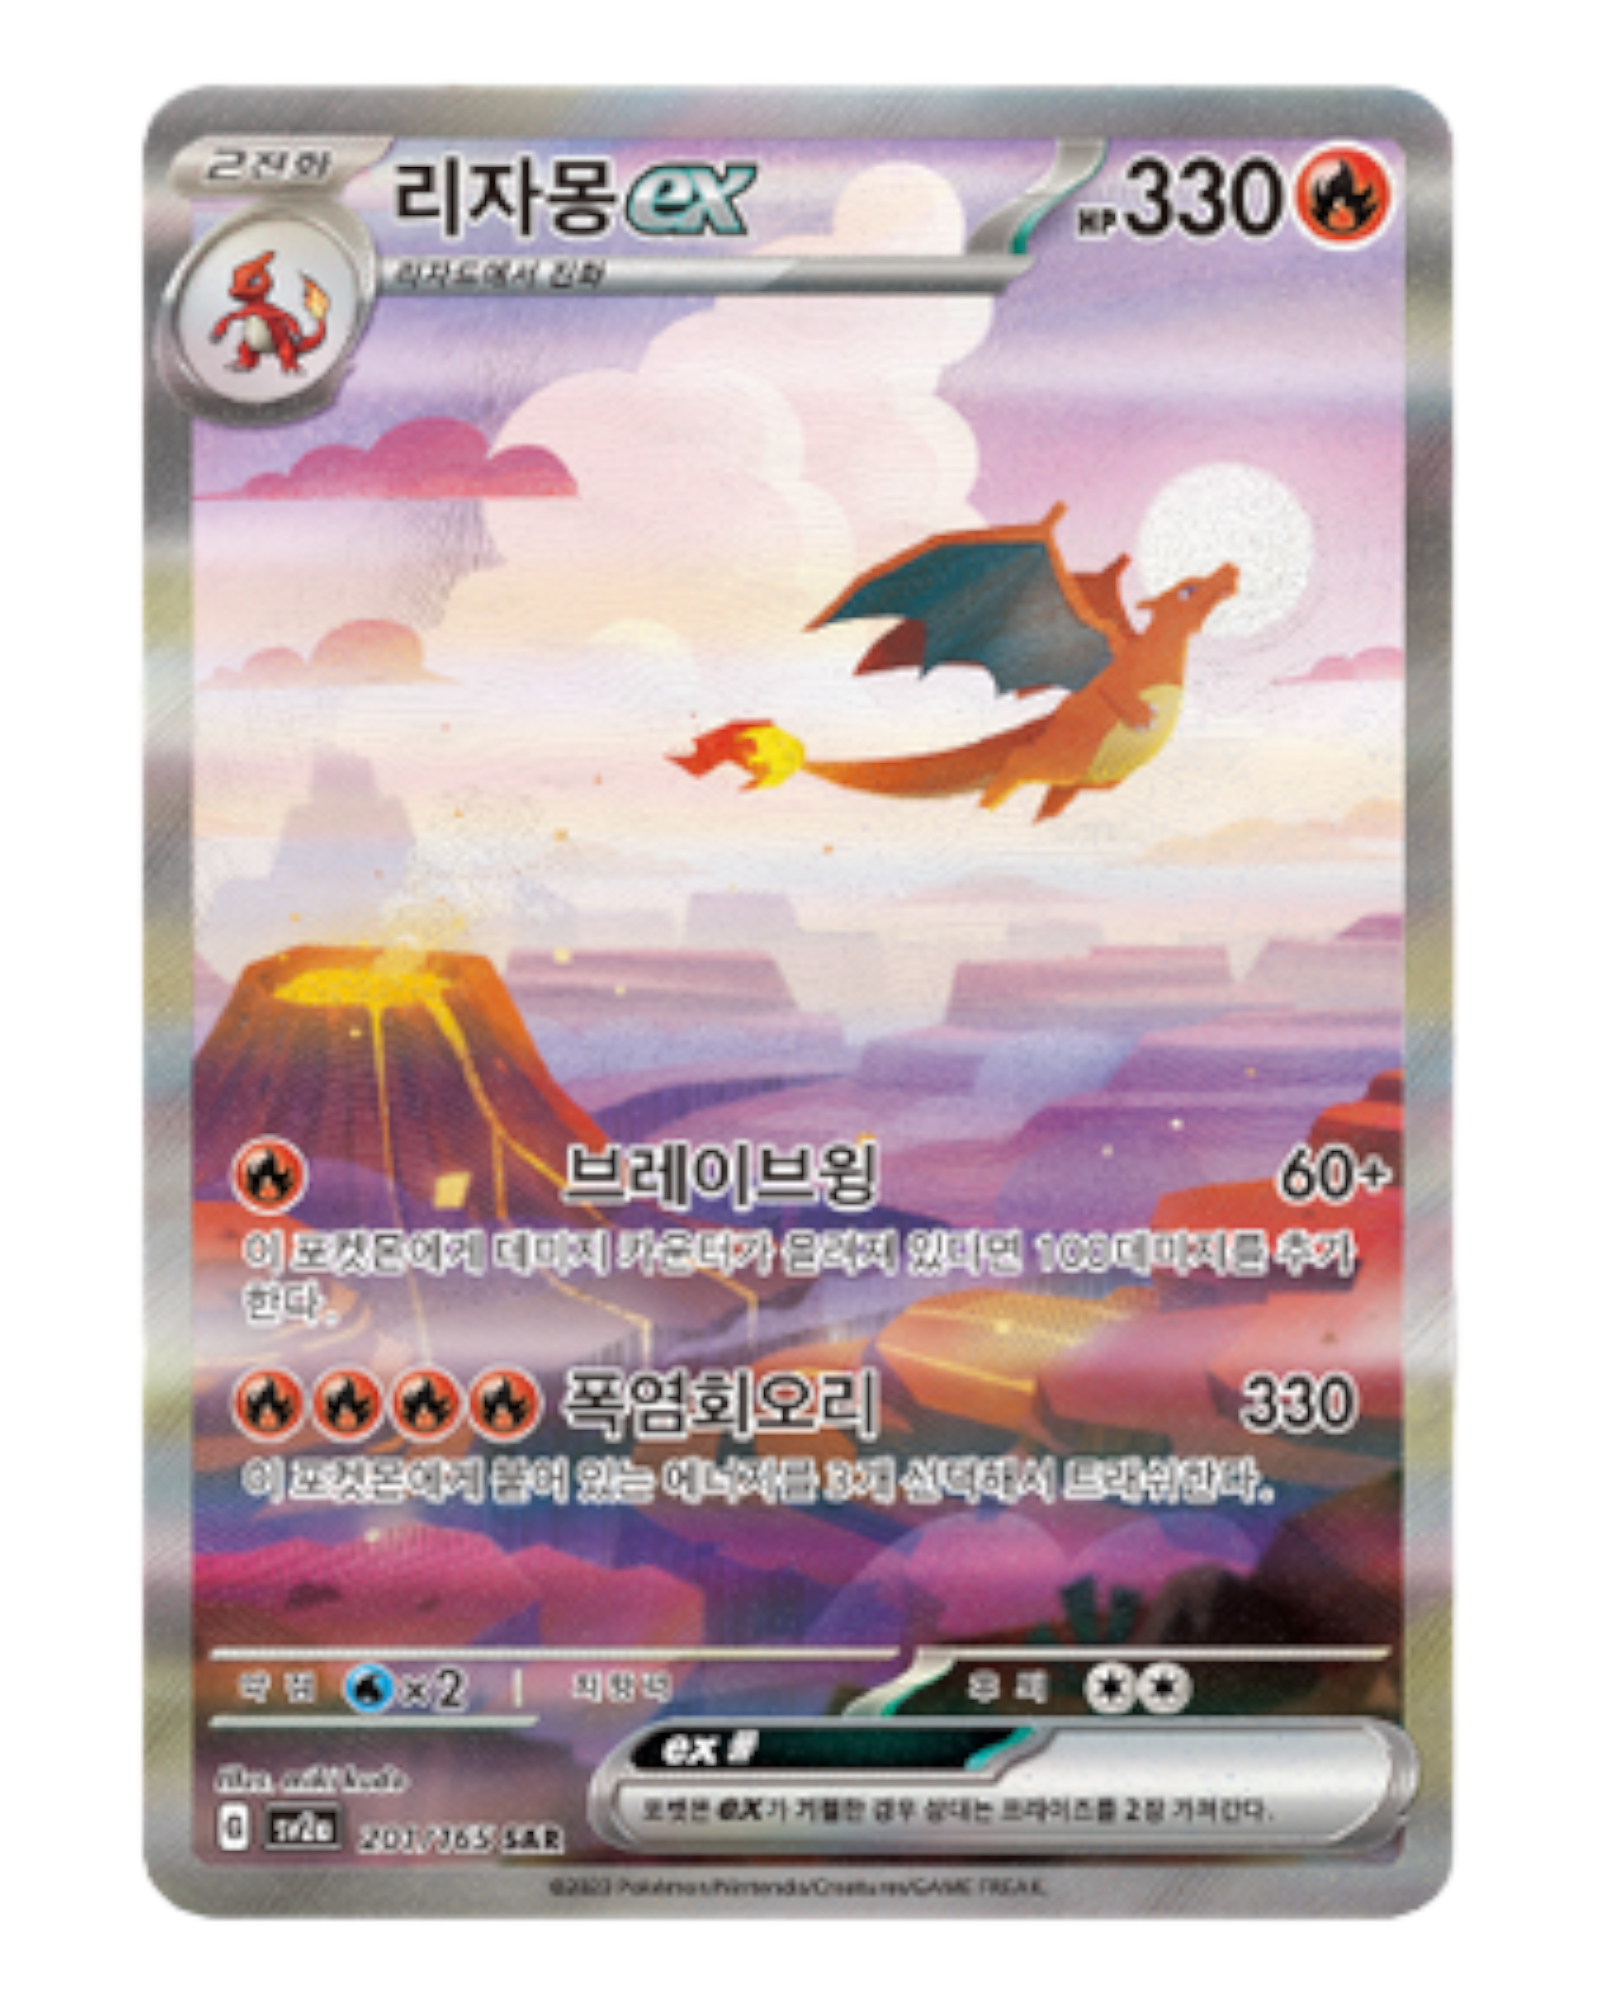 Scarlet & Violet - Pokémon 151 Booster Box - sv2a (Korean) – PokeUnlimited